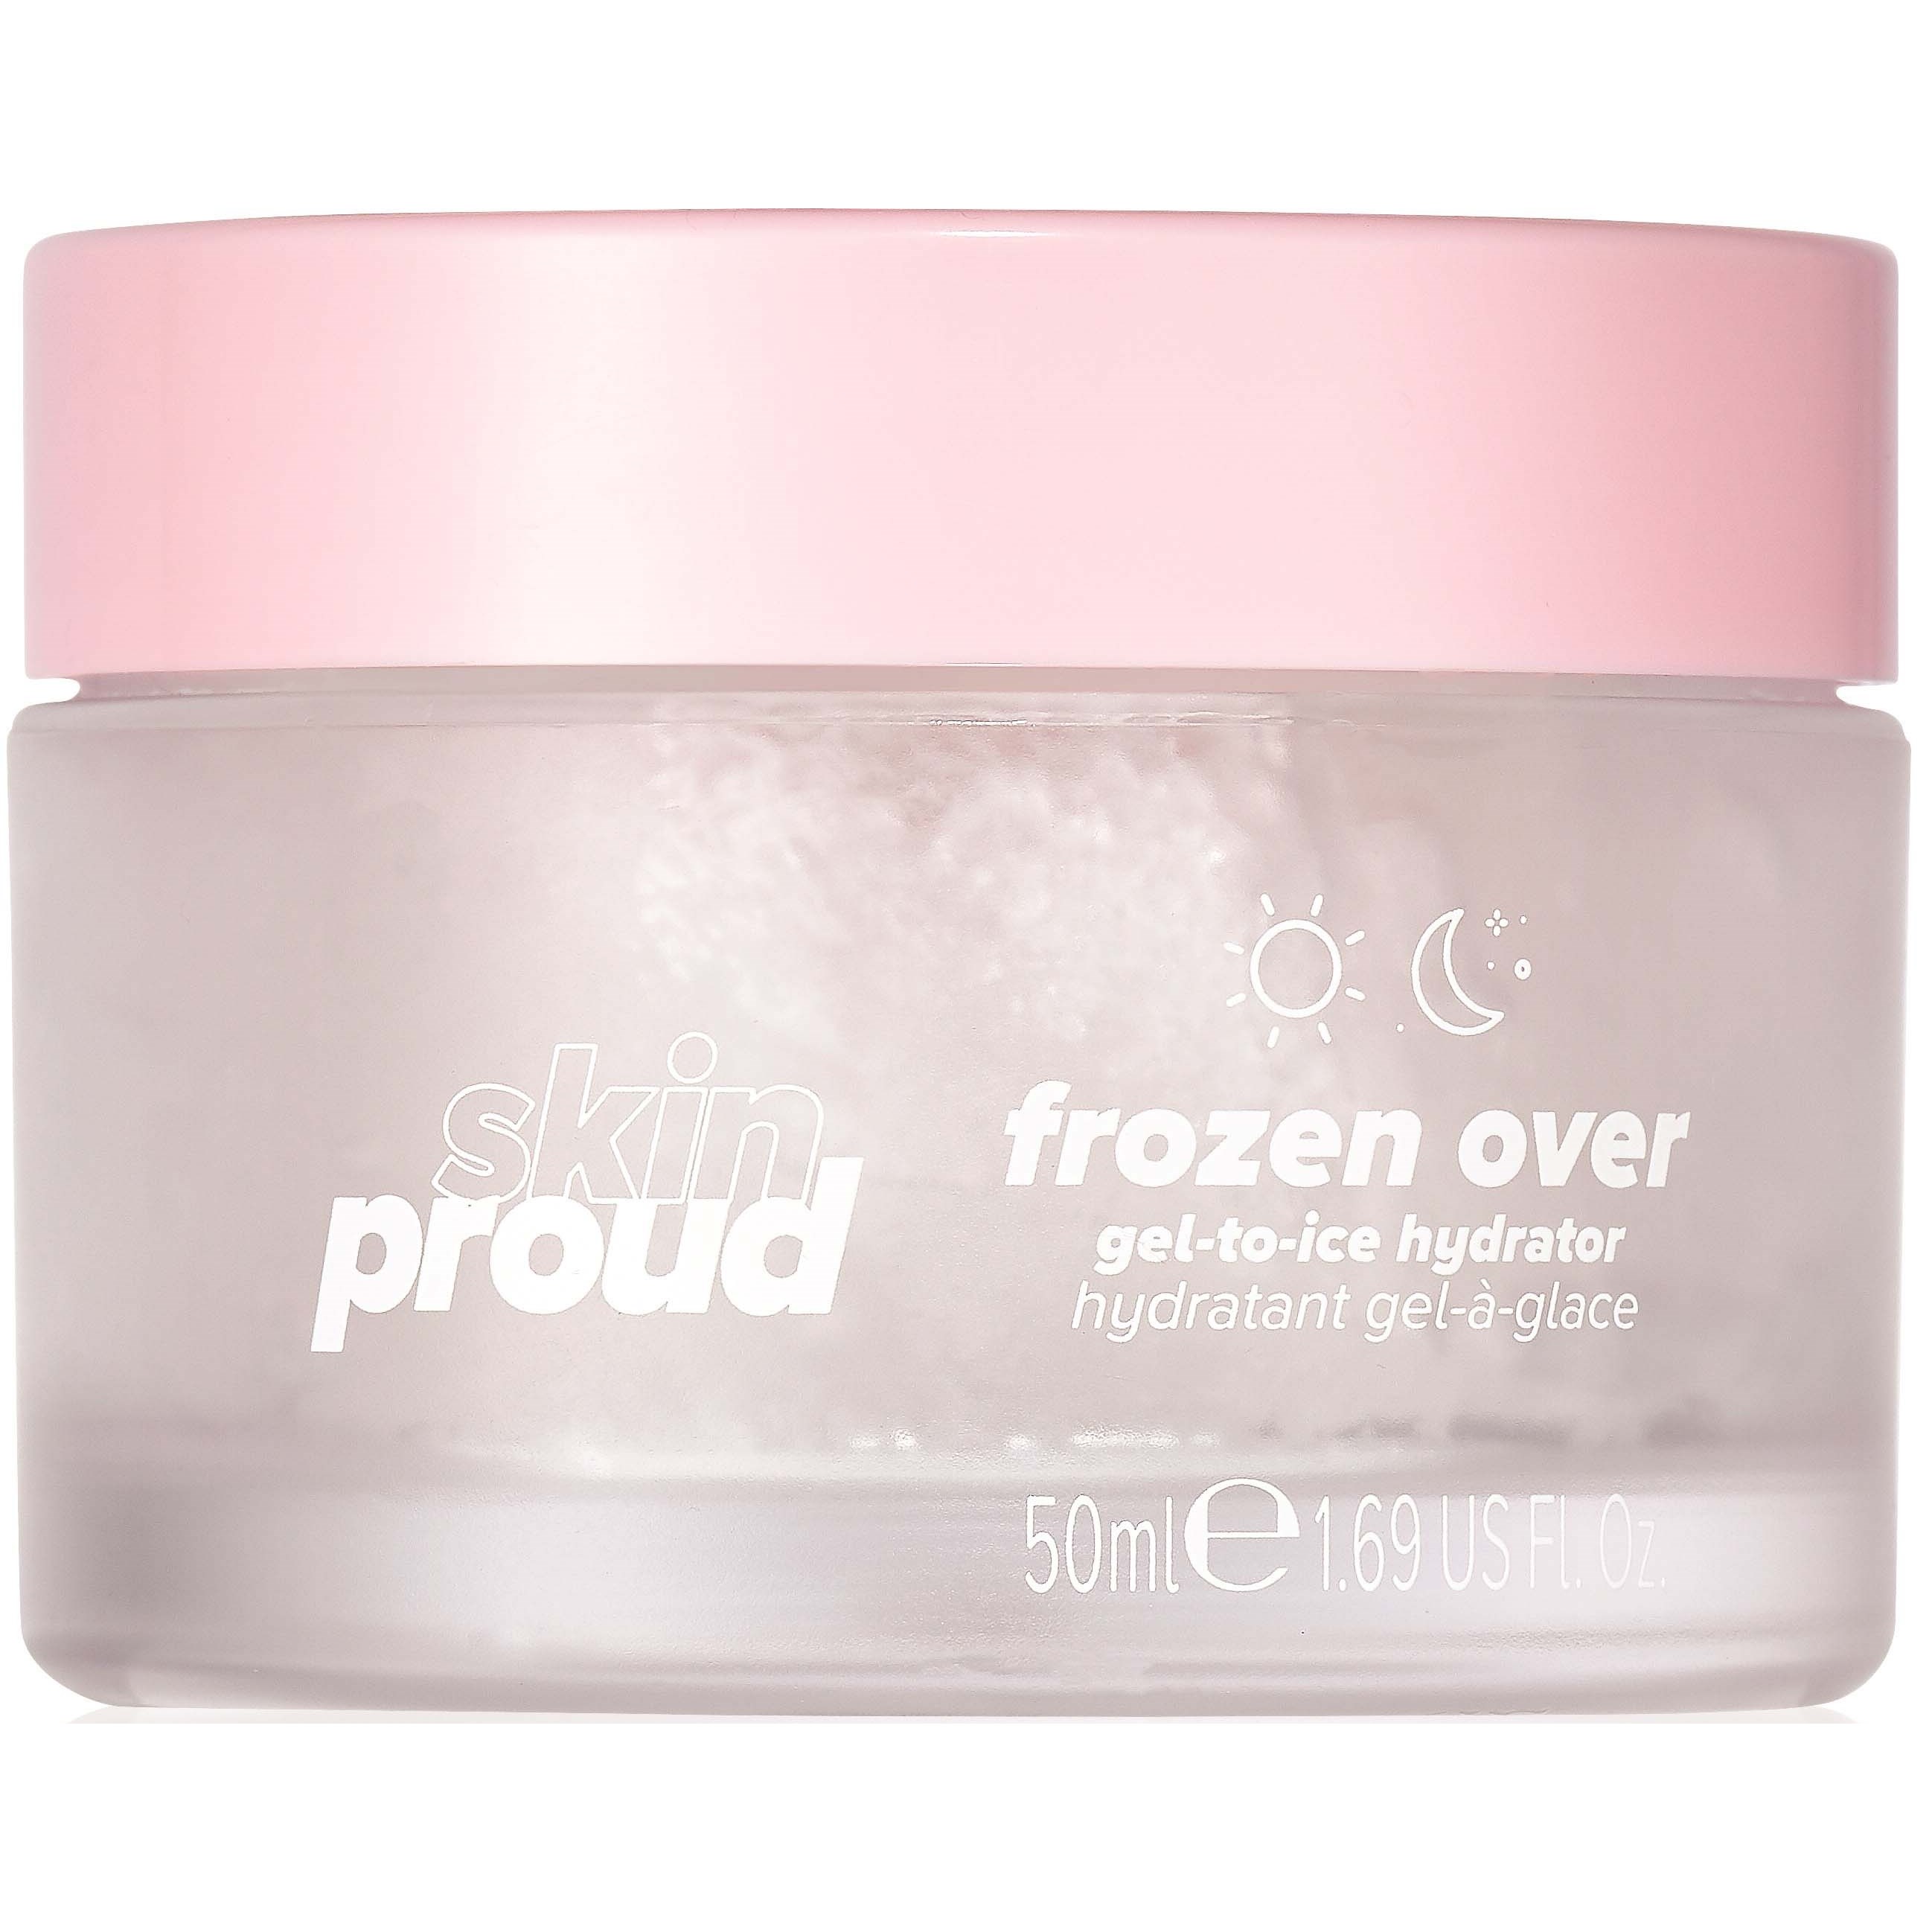 Skin Proud Frozen Over Gel-to-Ice Hydrator 50 ml